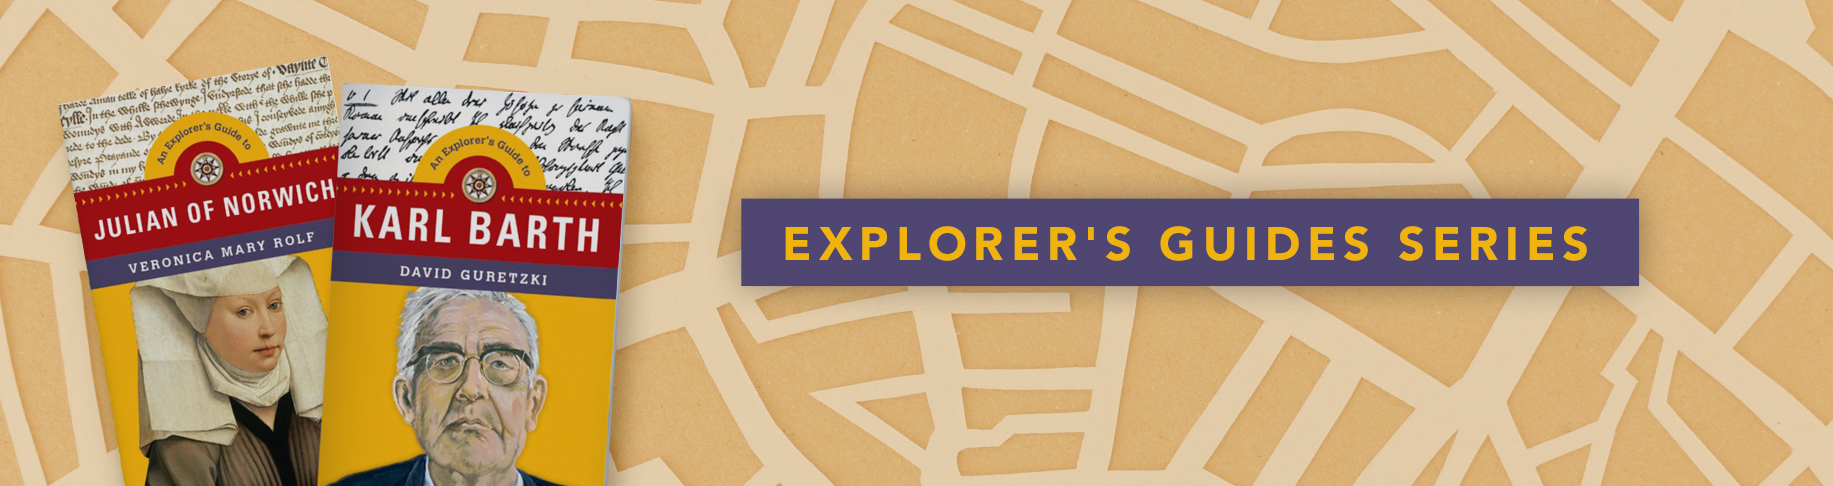 Explorer's Guides Series